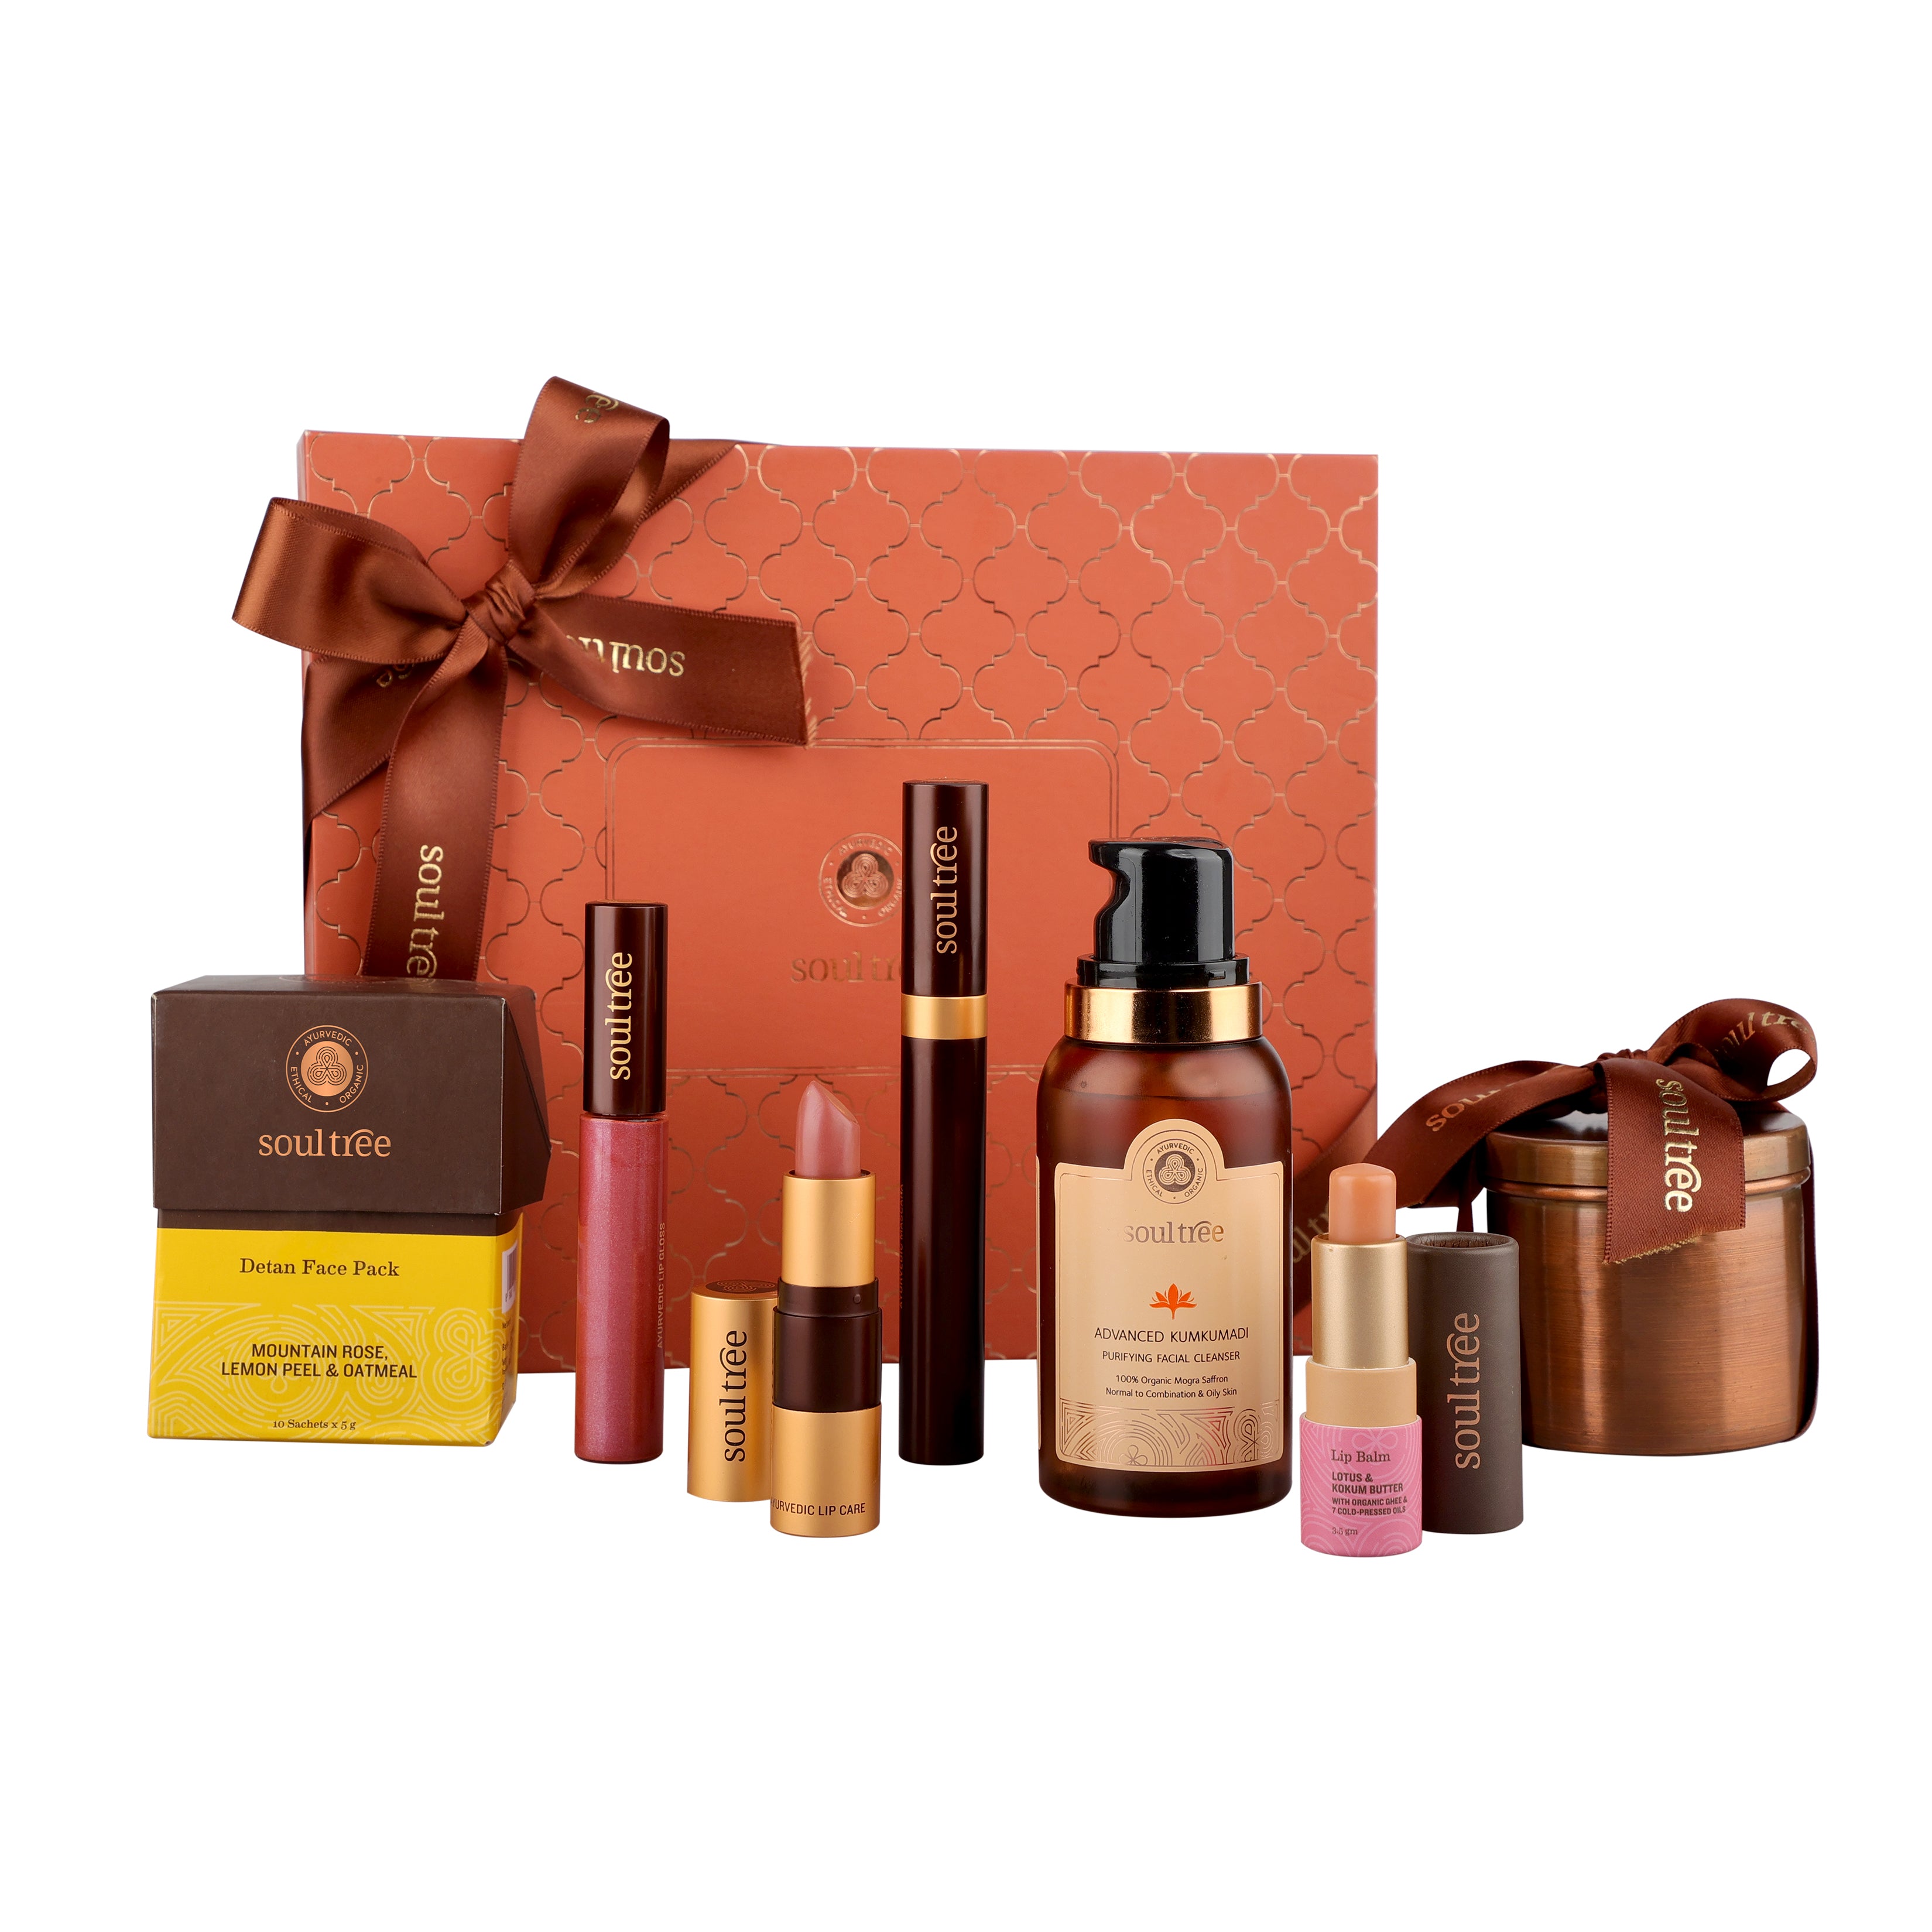 The Balanced Beauty Gift Box